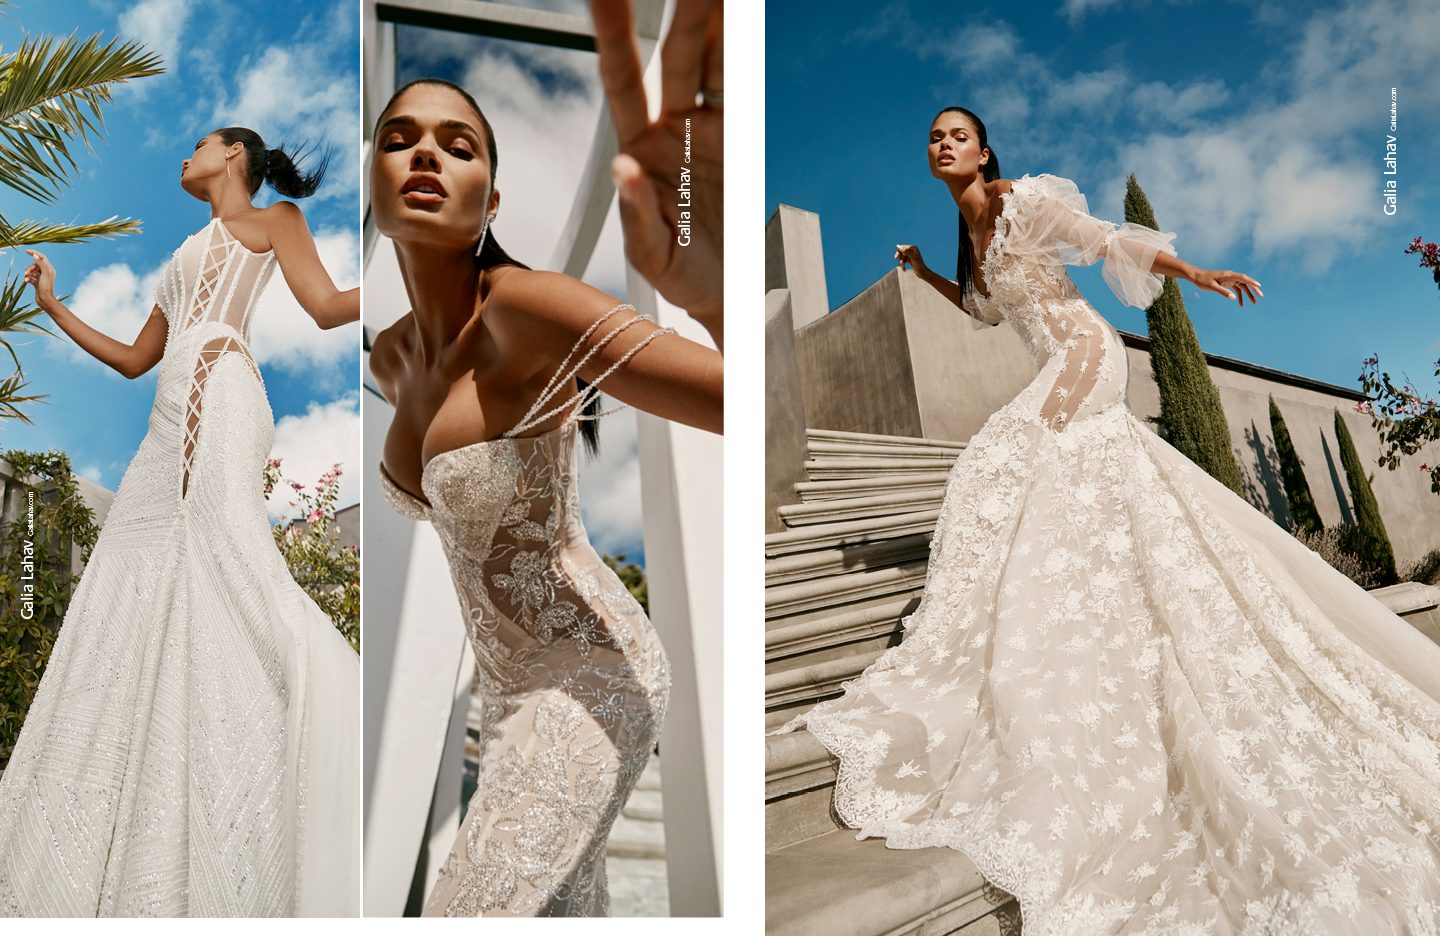 The Top Wedding Dresses 2023 - Wedding Style Magazine